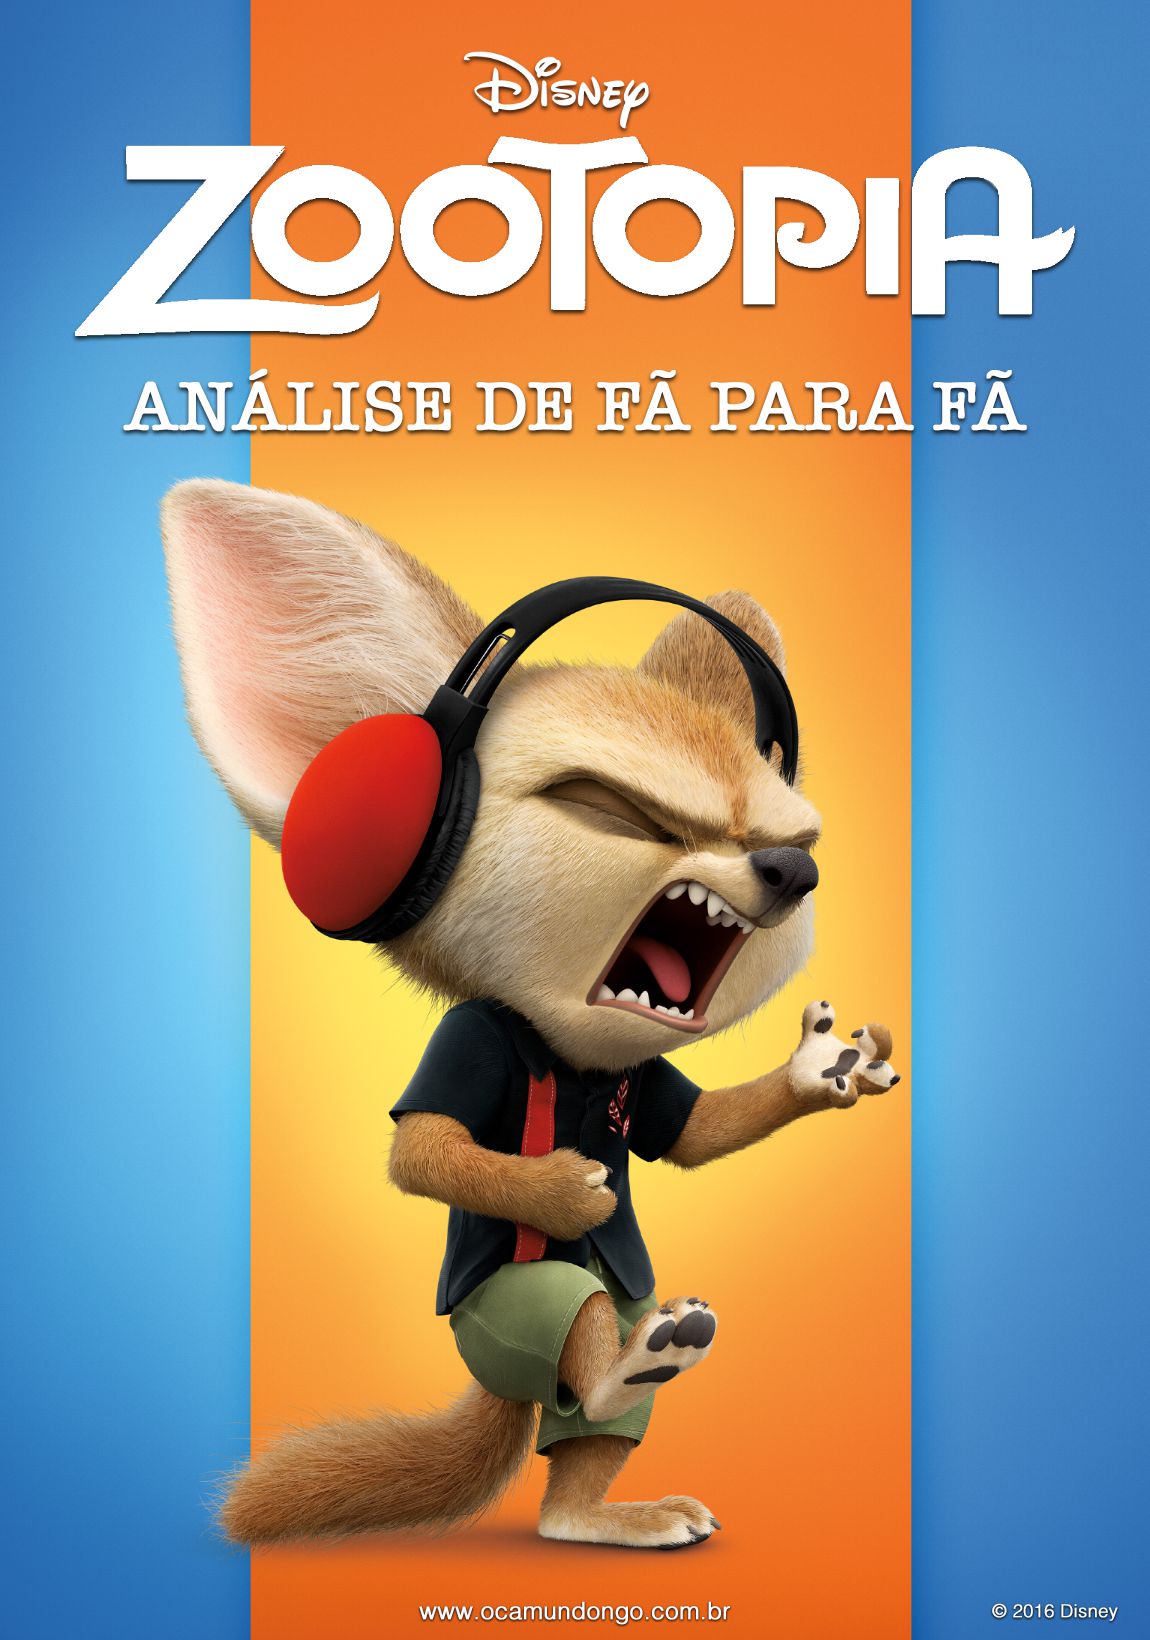 zootopia-poster-analise-finnick-camundongo